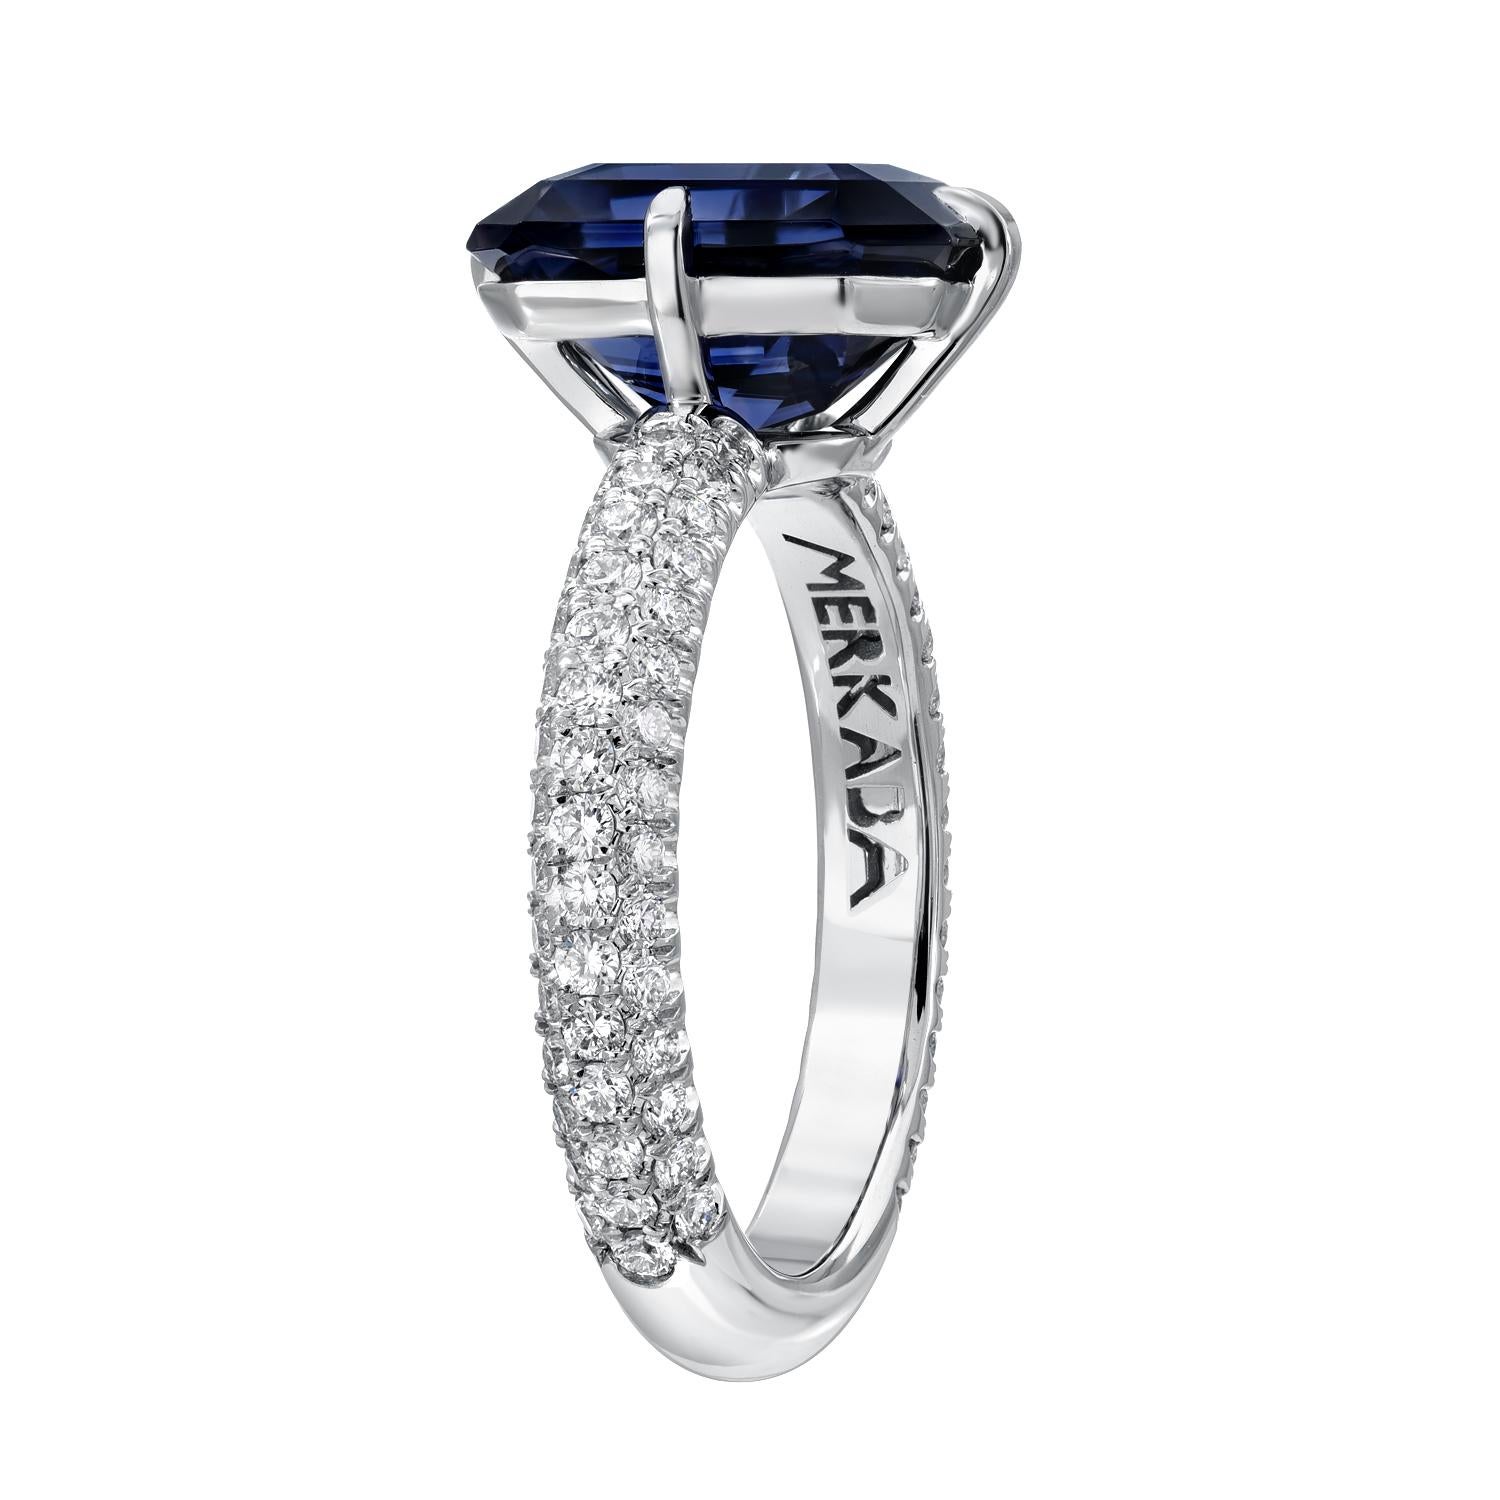 Modern Blue Spinel Ring 4.01 Carat Emerald Cut For Sale